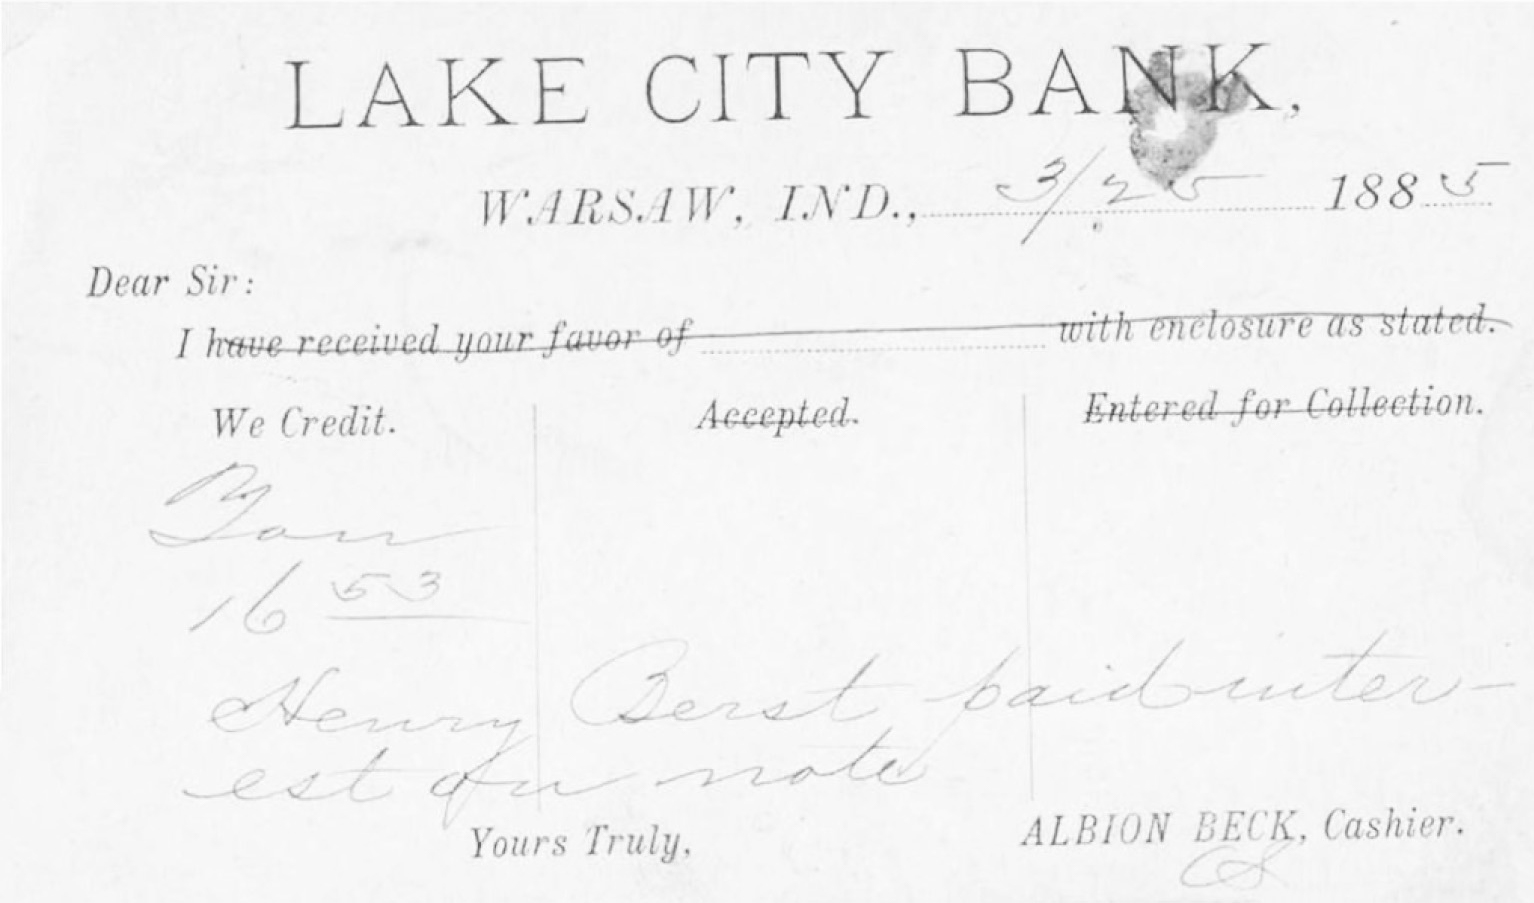 Lake City Bank postcard from 1880s